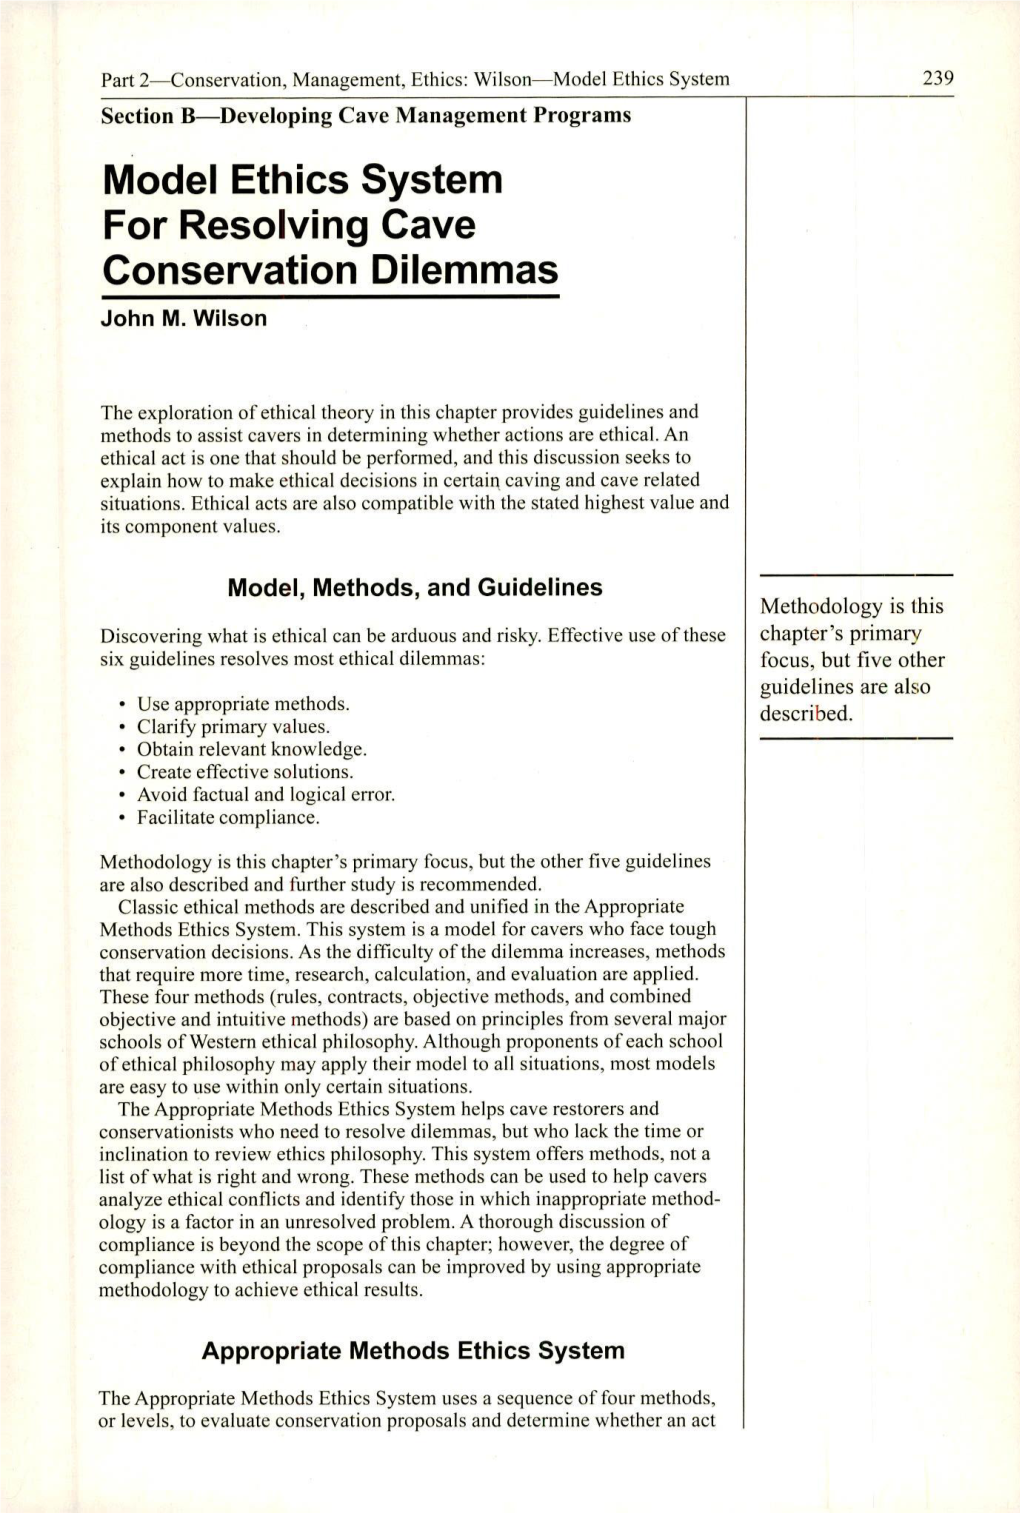 Model Ethics System for Resolving Cave Conservation Dilemmas John M